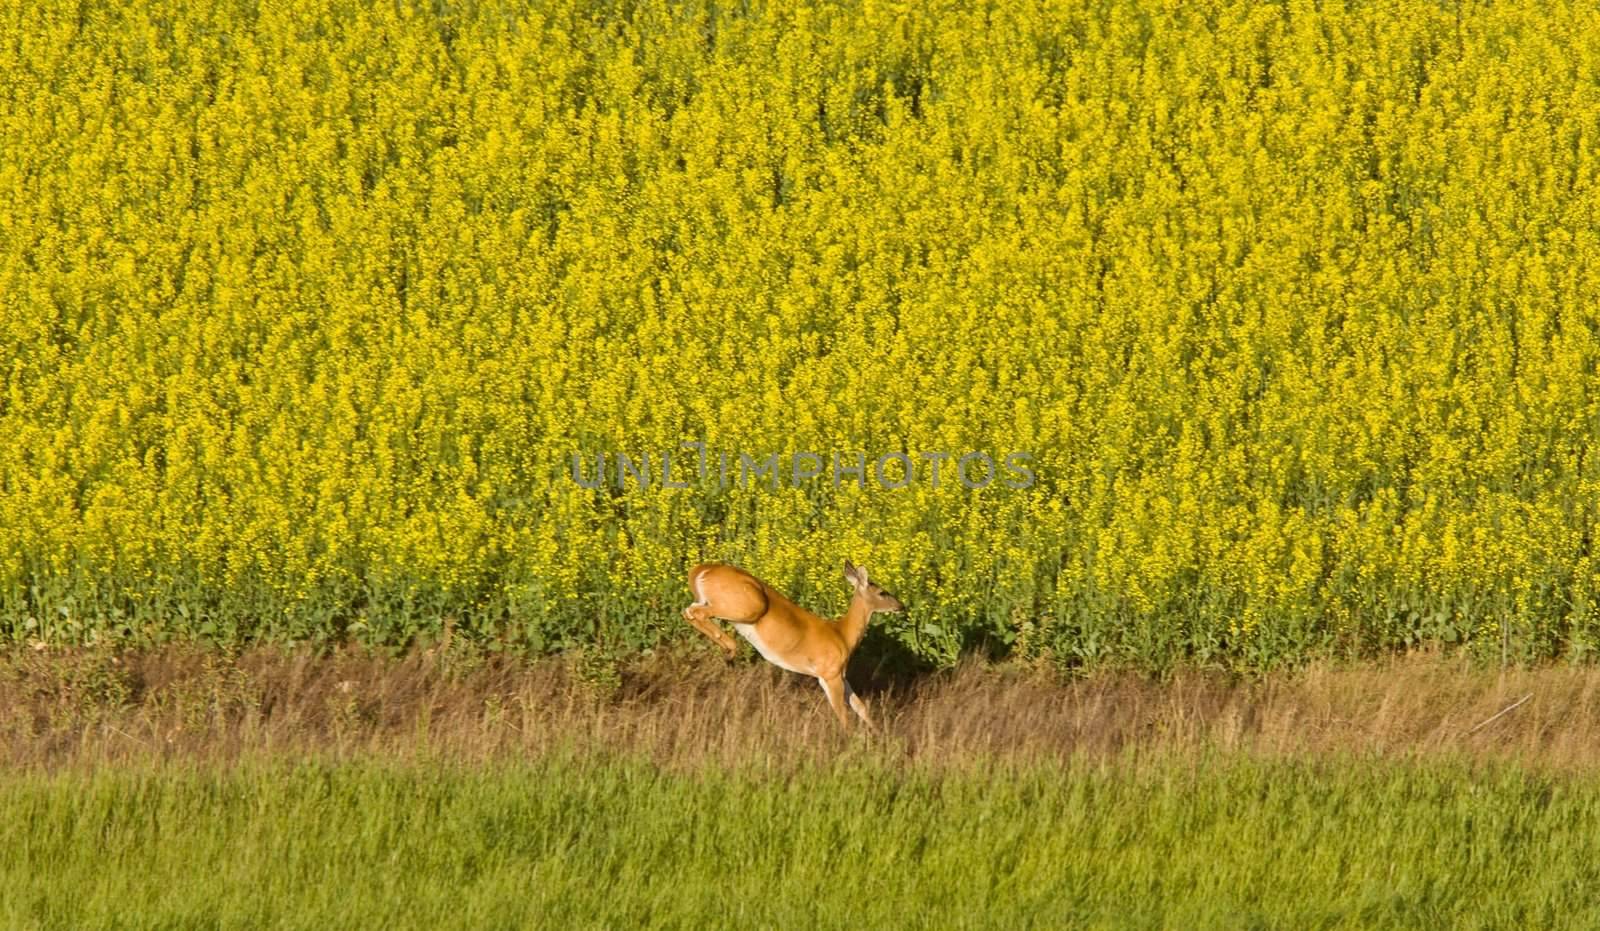 Deer running in canola mustard field by pictureguy